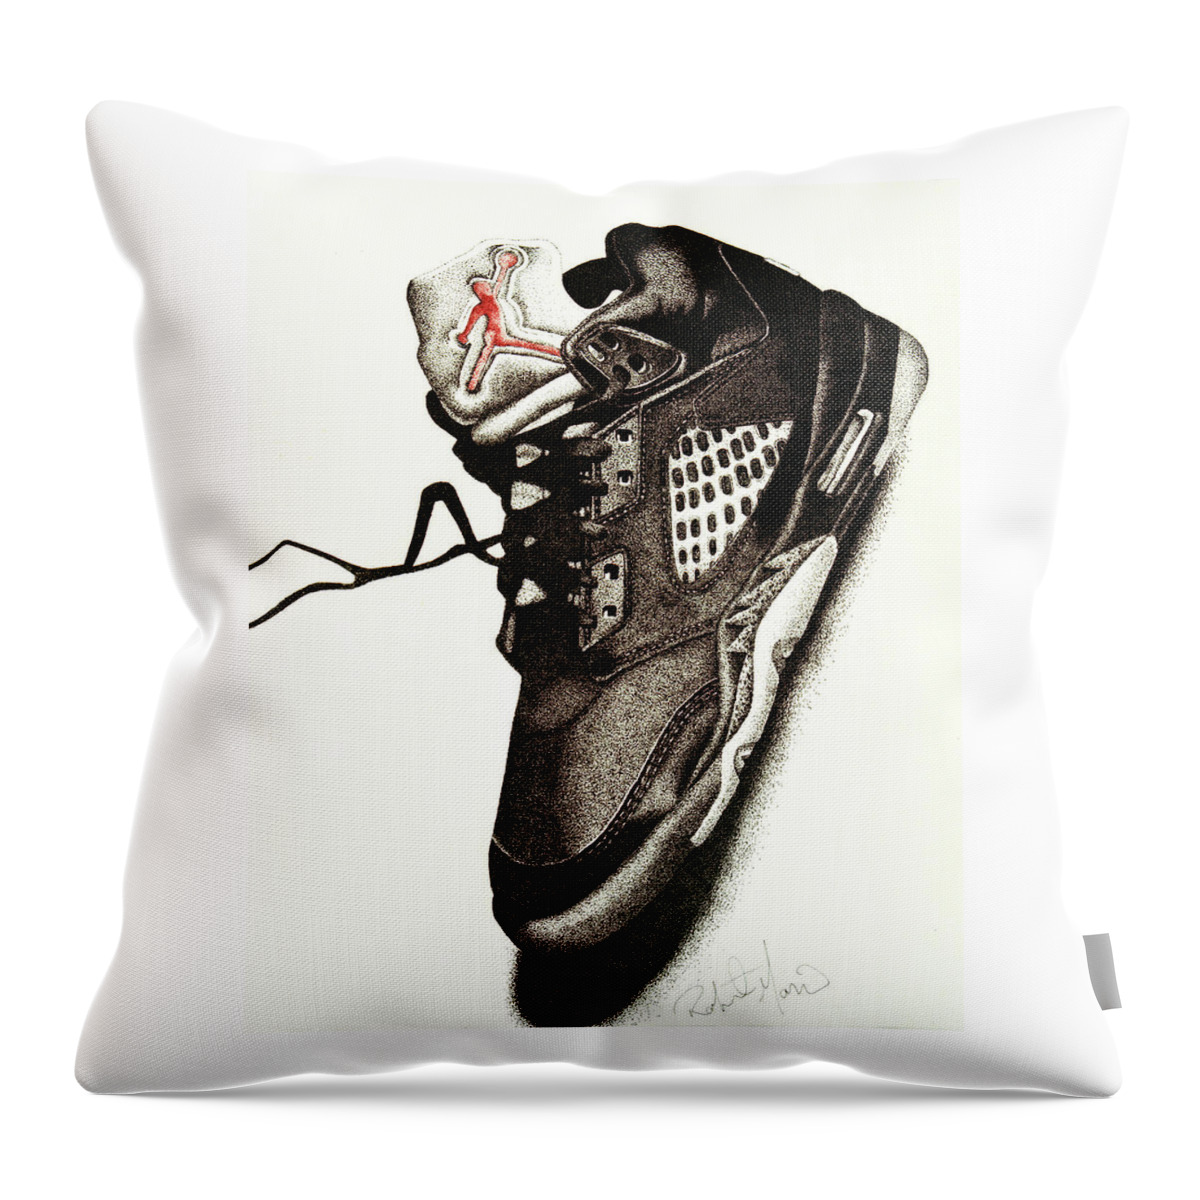 Shoes Throw Pillow featuring the drawing Air Jordan by Robert Morin